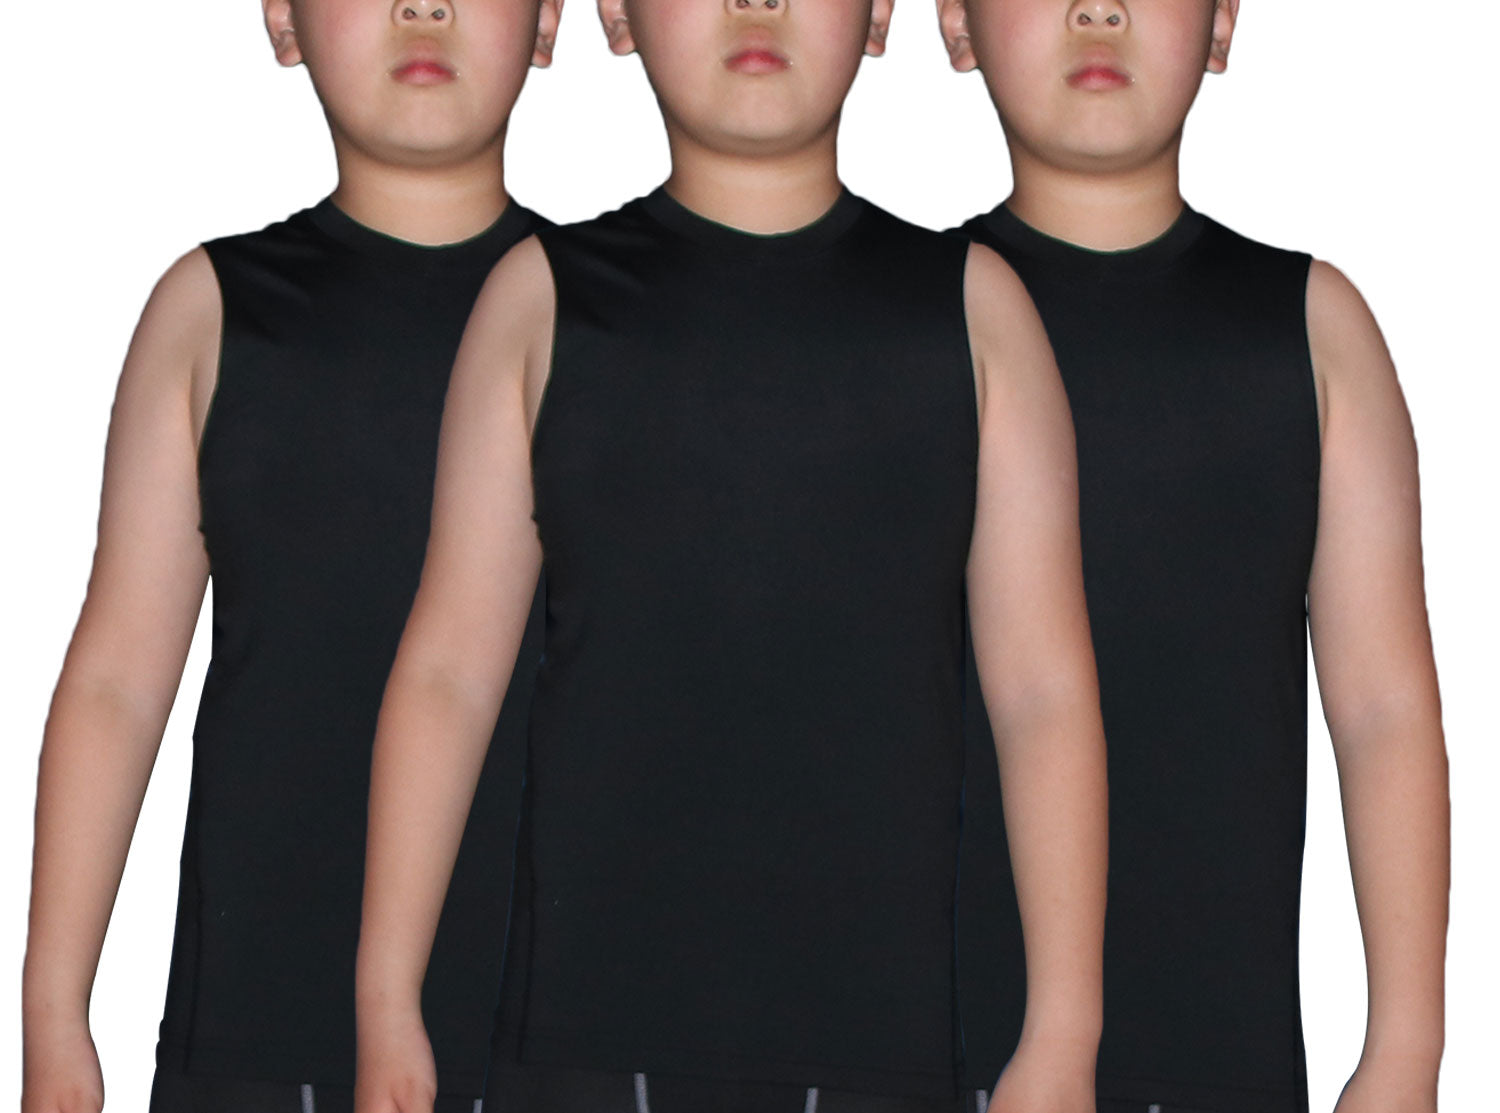 Boy's 3 Pack Compression Sleeveless Shirt Soccer Tank Top Undershirts LANBAOSI